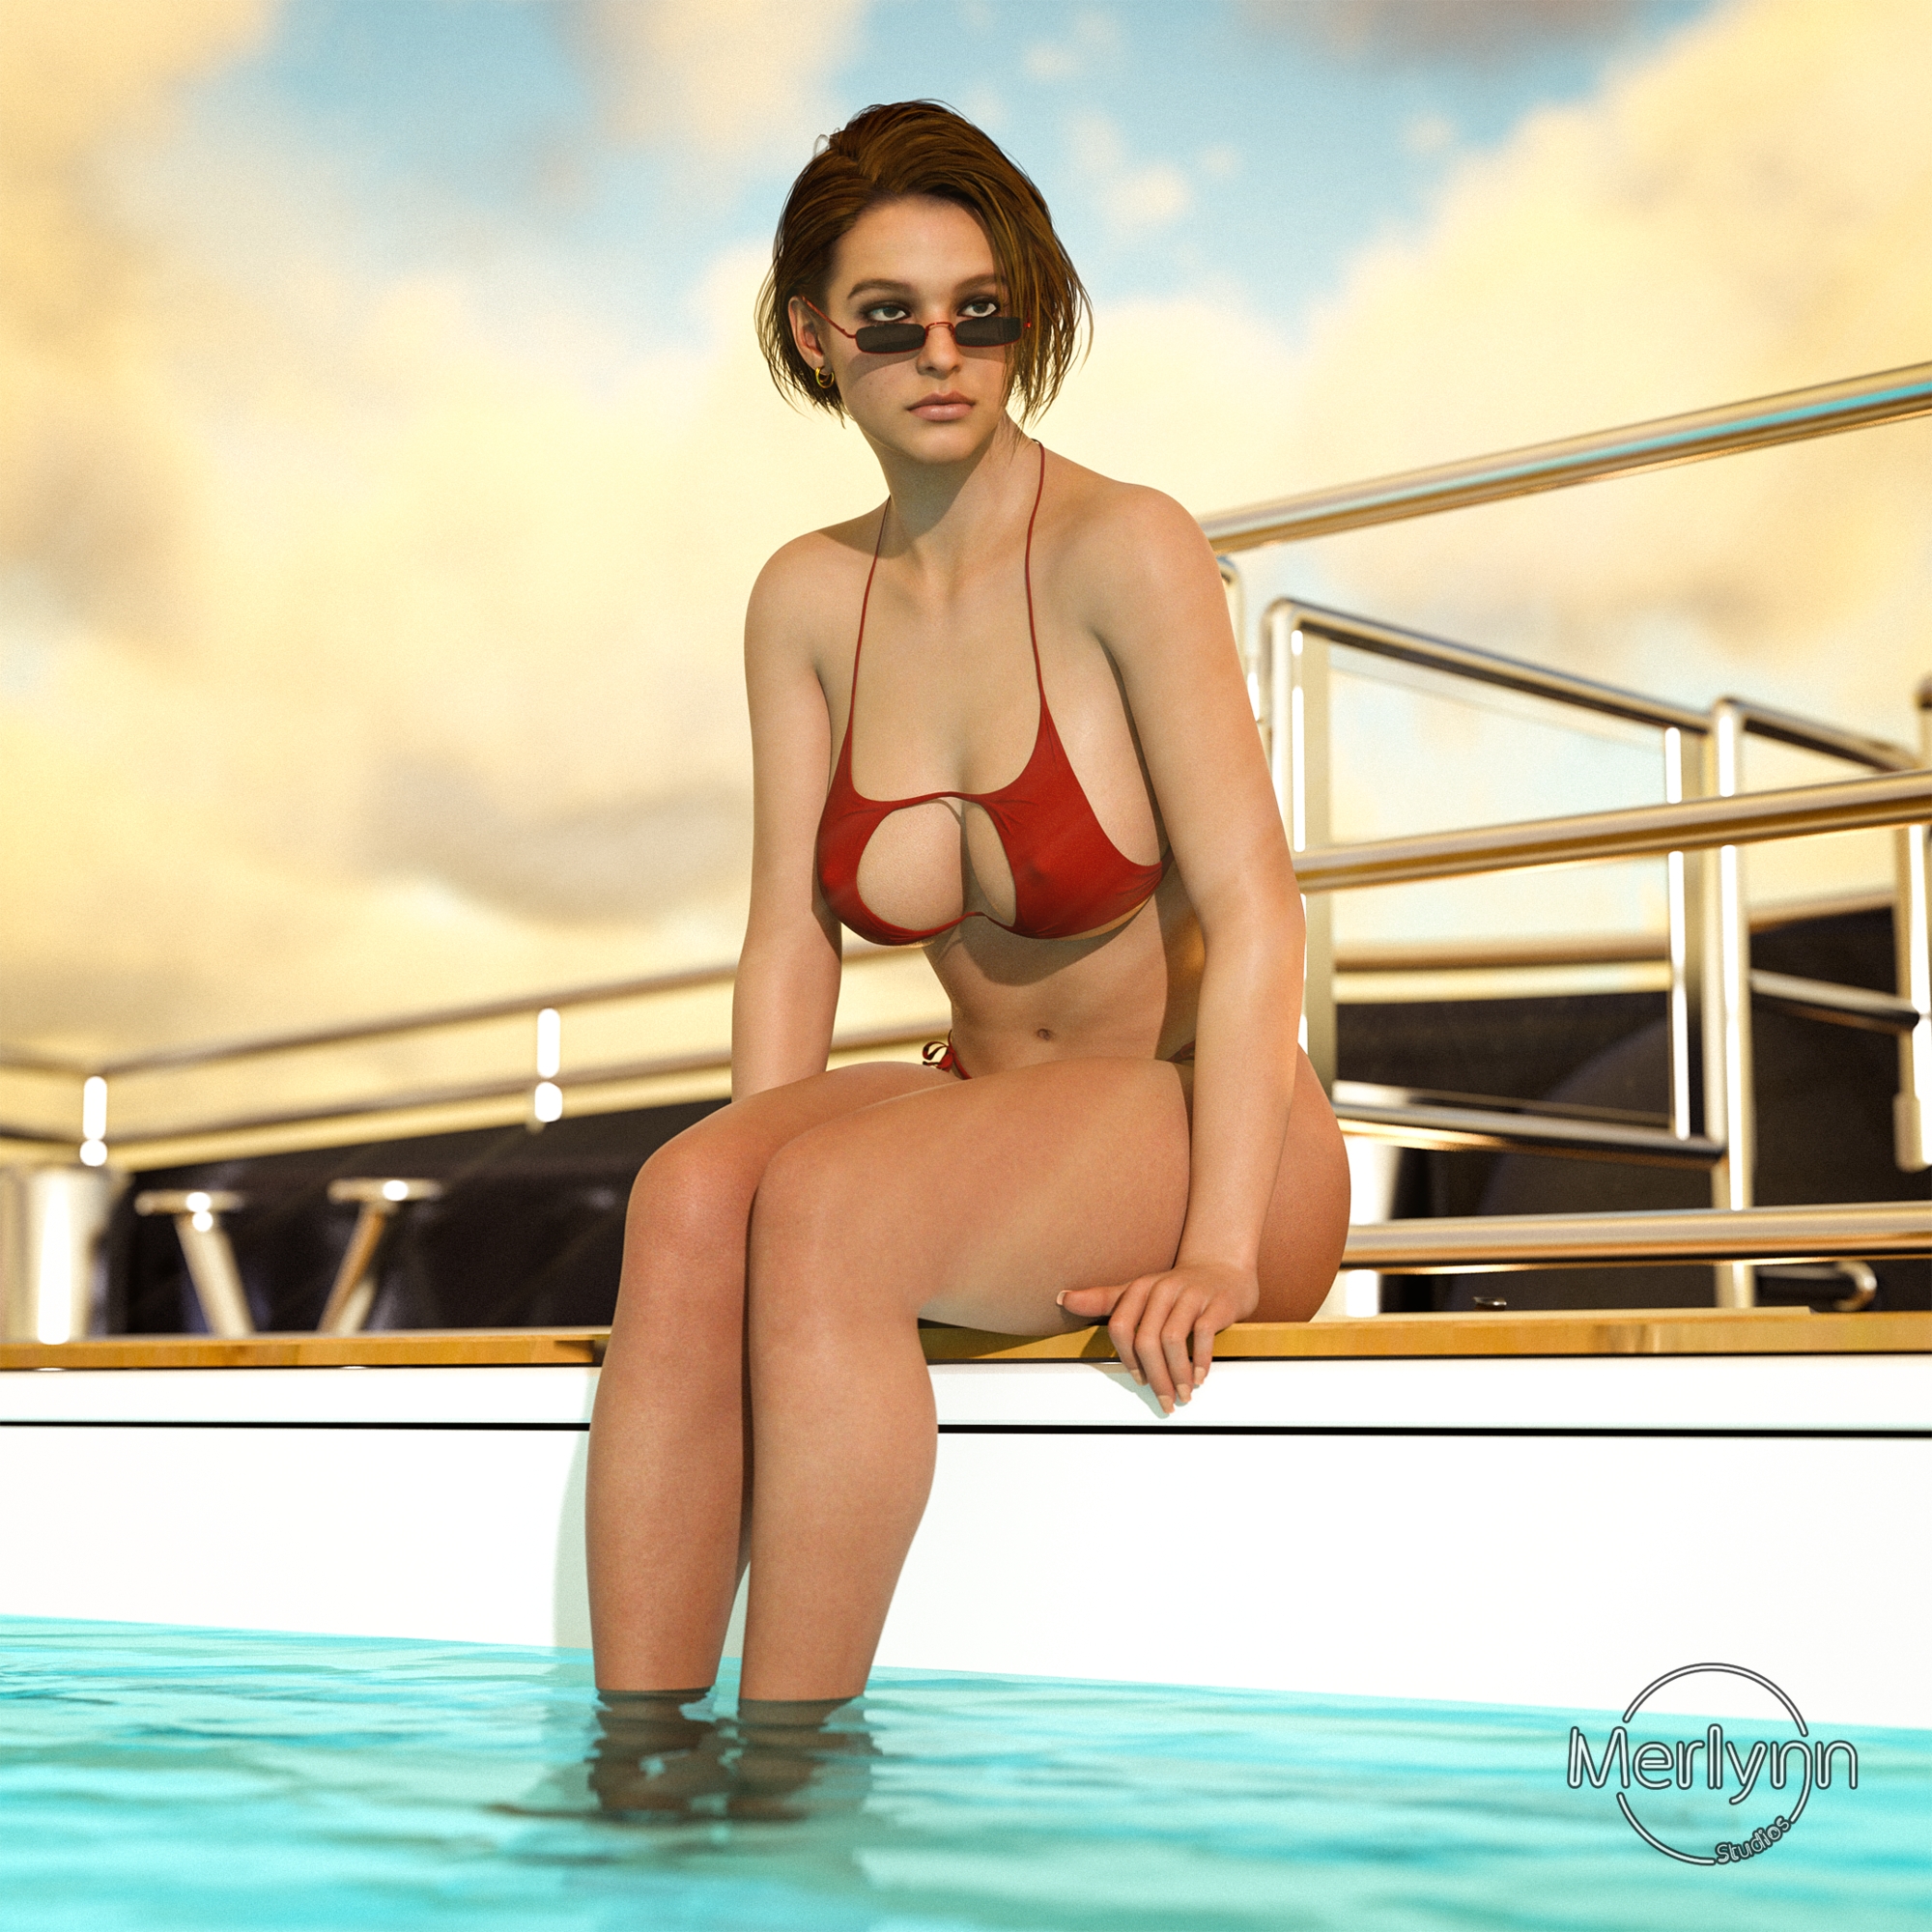 No Zombies... No Worries! Resident Evil Resident Evil 3 Remake Jill Valentine Sexy Hot Big Tits Big Breasts Bikini Pool Sunset